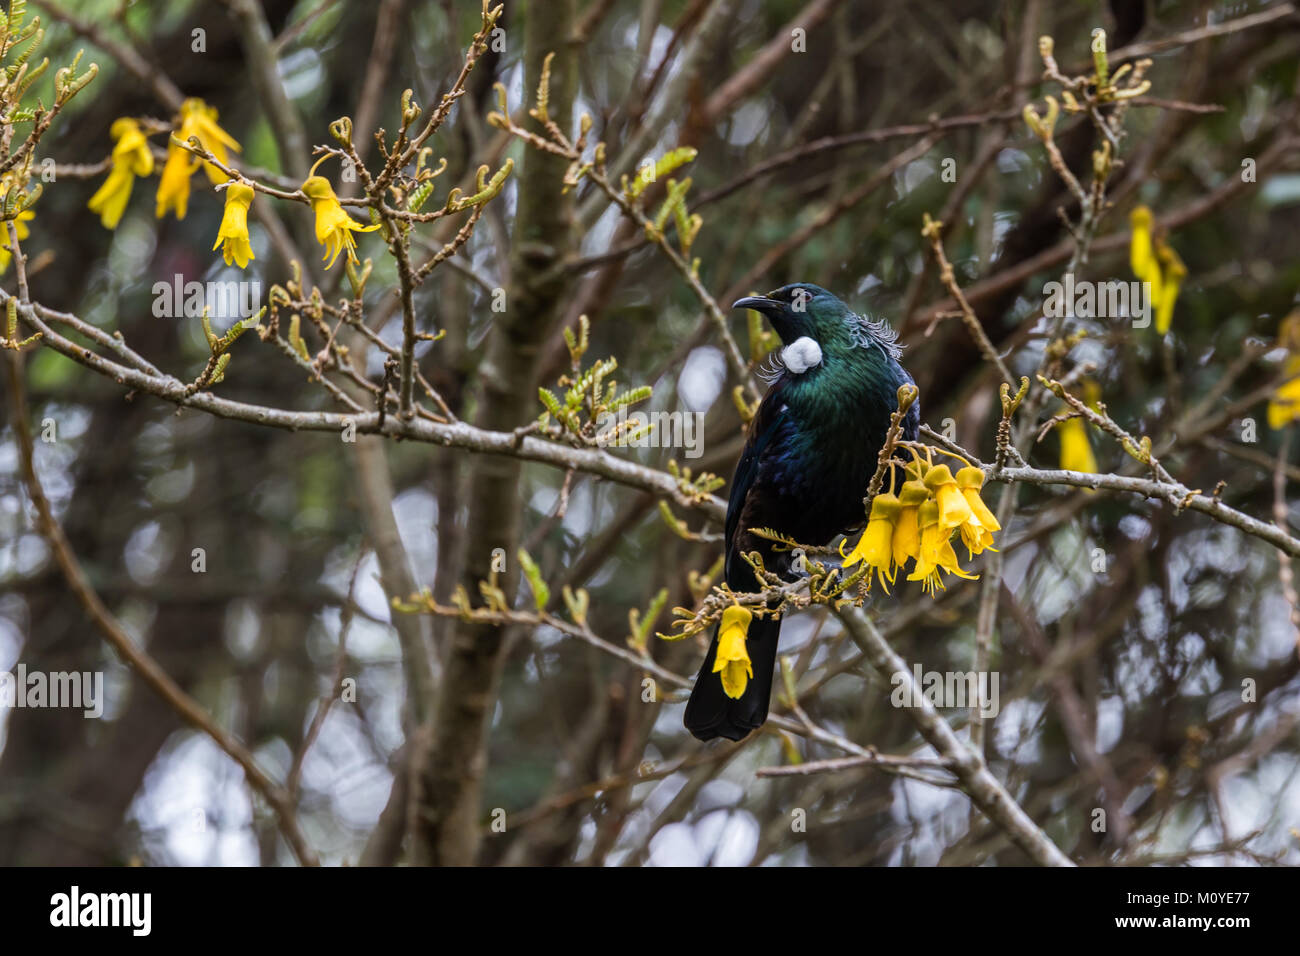 The native Tui bird of New Zealand feeding on Kowhai flowers Stock Photo